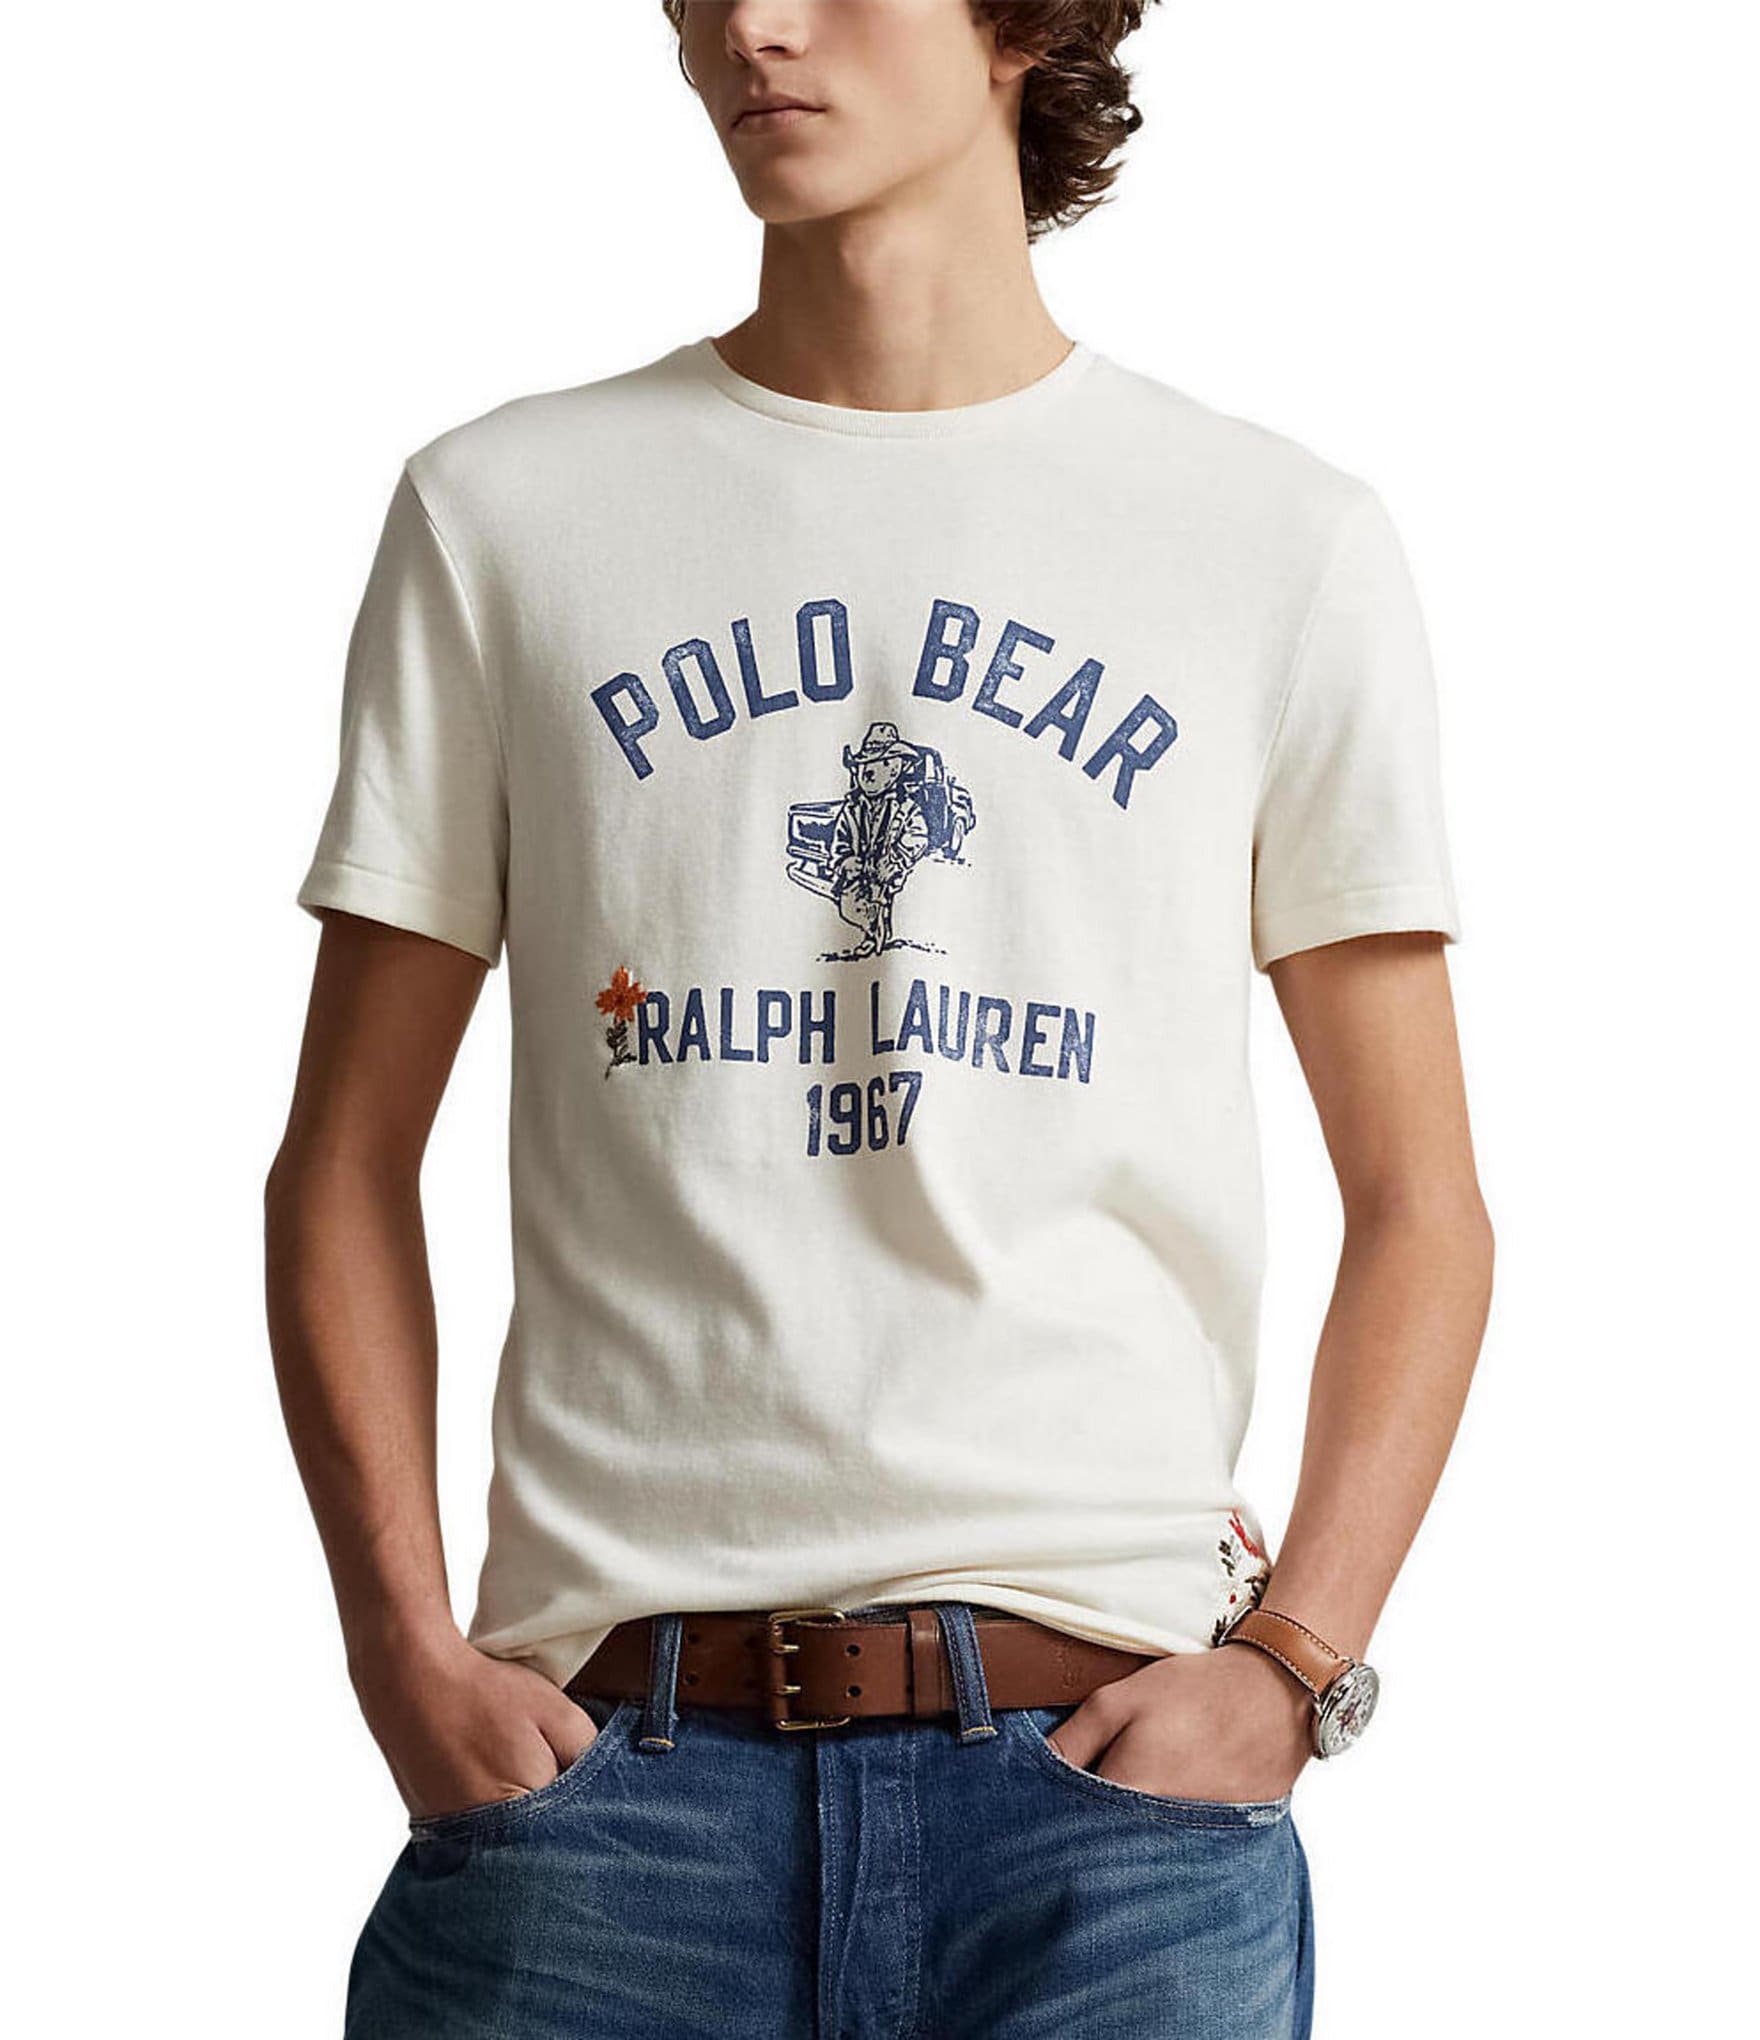 Polo Ralph Lauren Polo Bear Jersey Short-Sleeve Tee | Dillard's